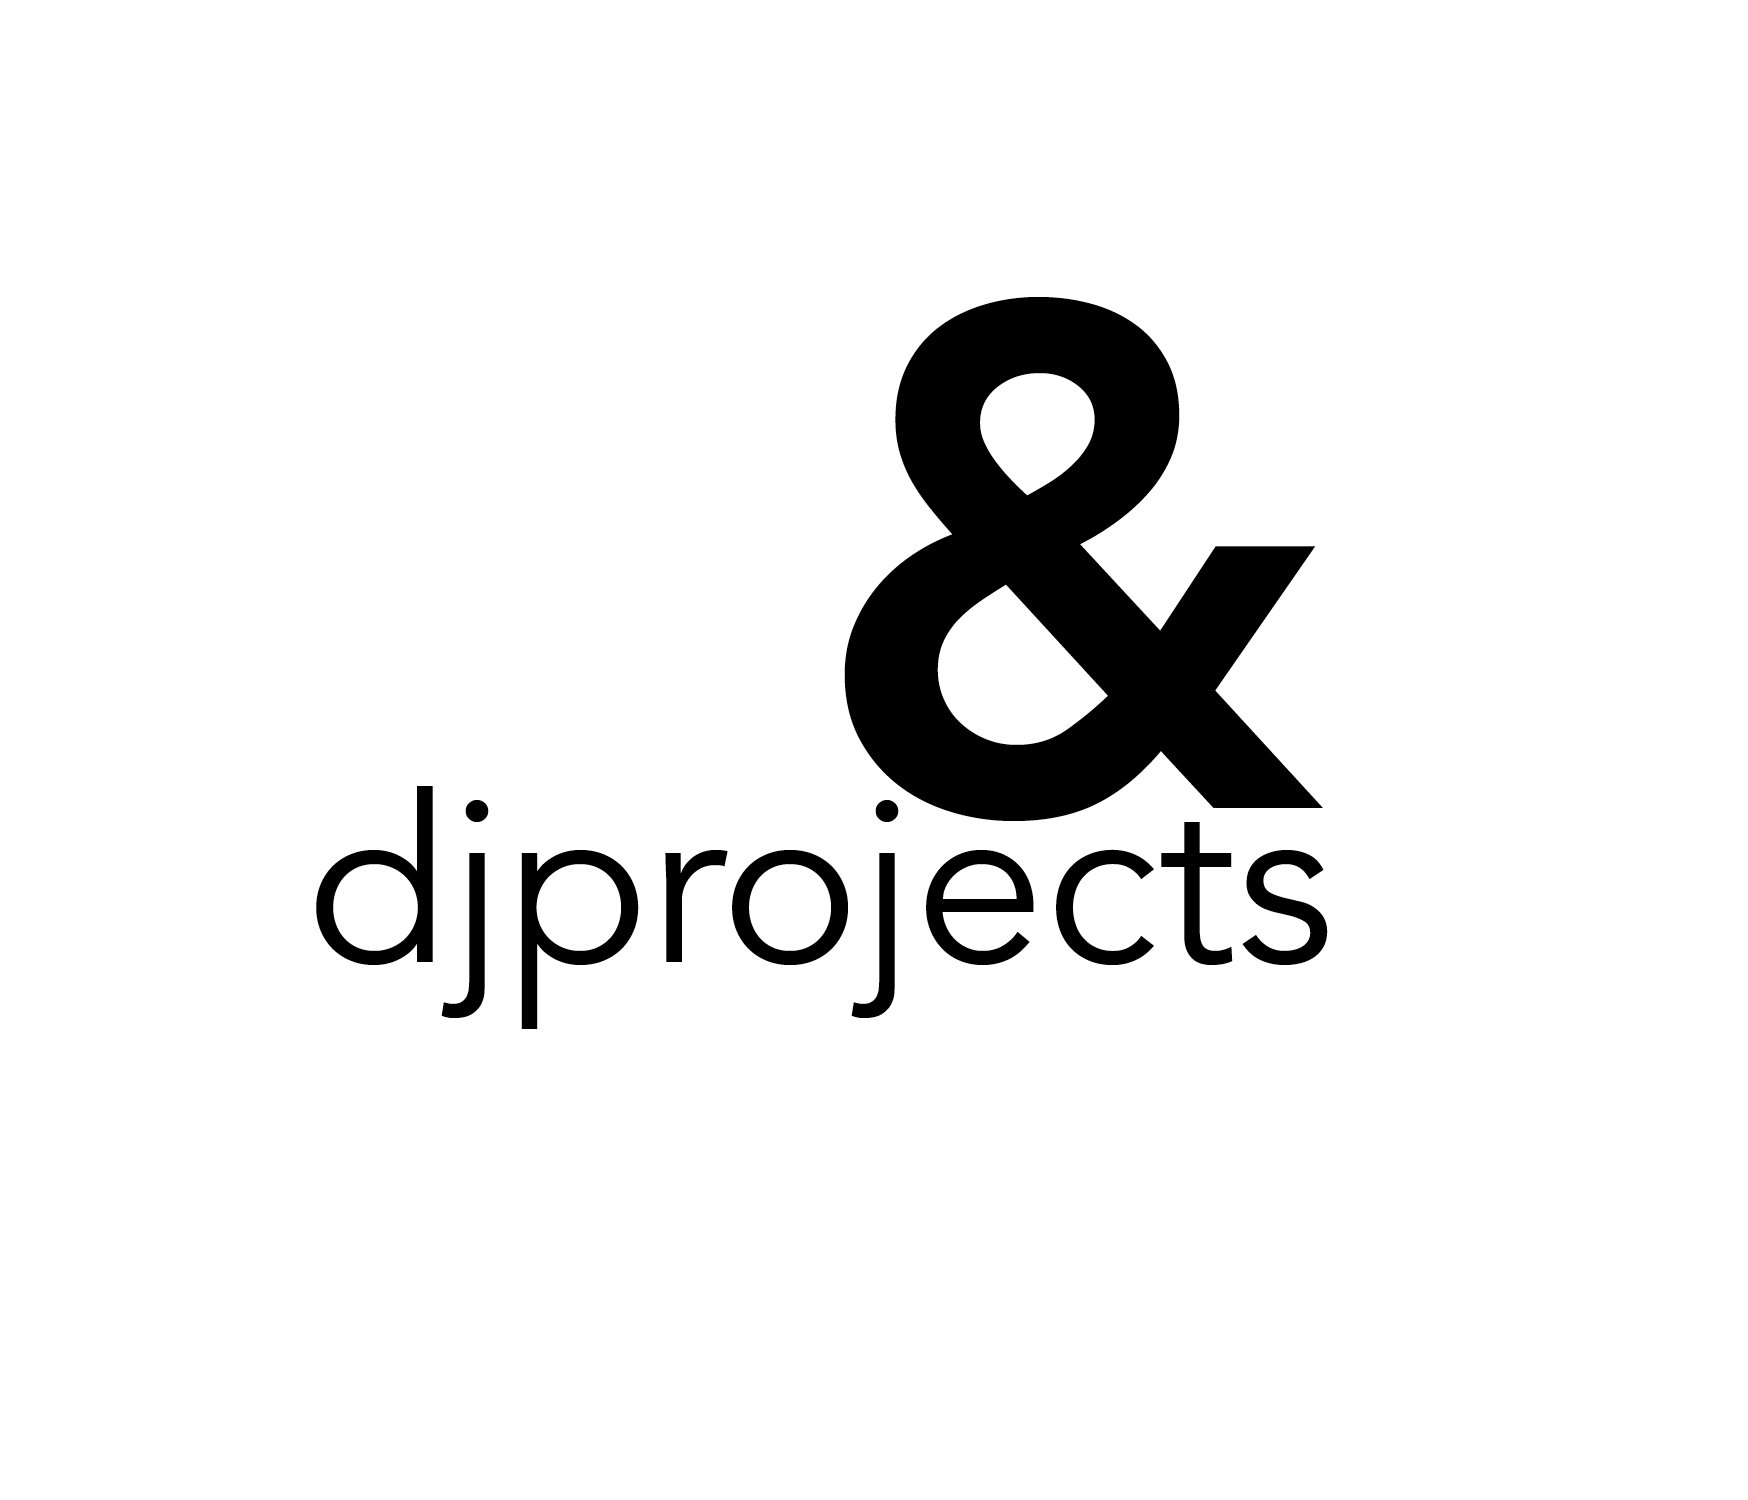 dj projects master logo.jpg